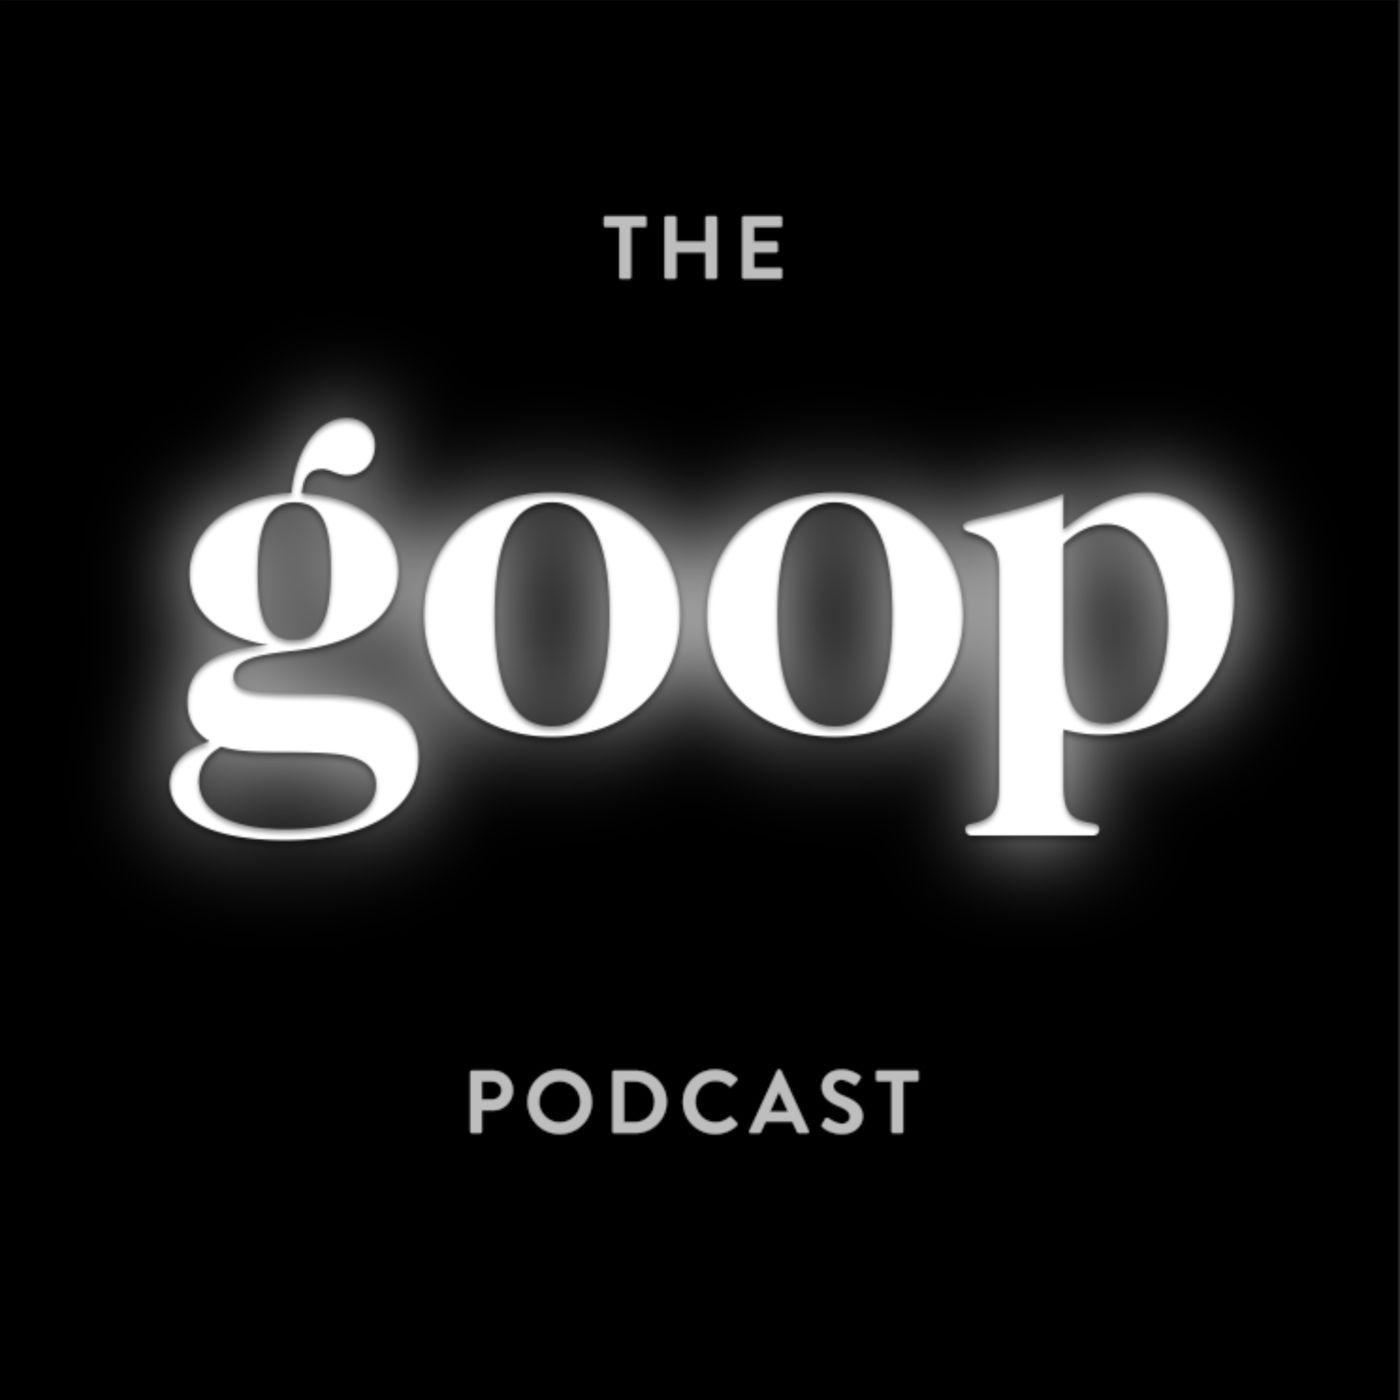 Goop Logo - The goop Podcast | Premium Podcast Leader. Cadence13.